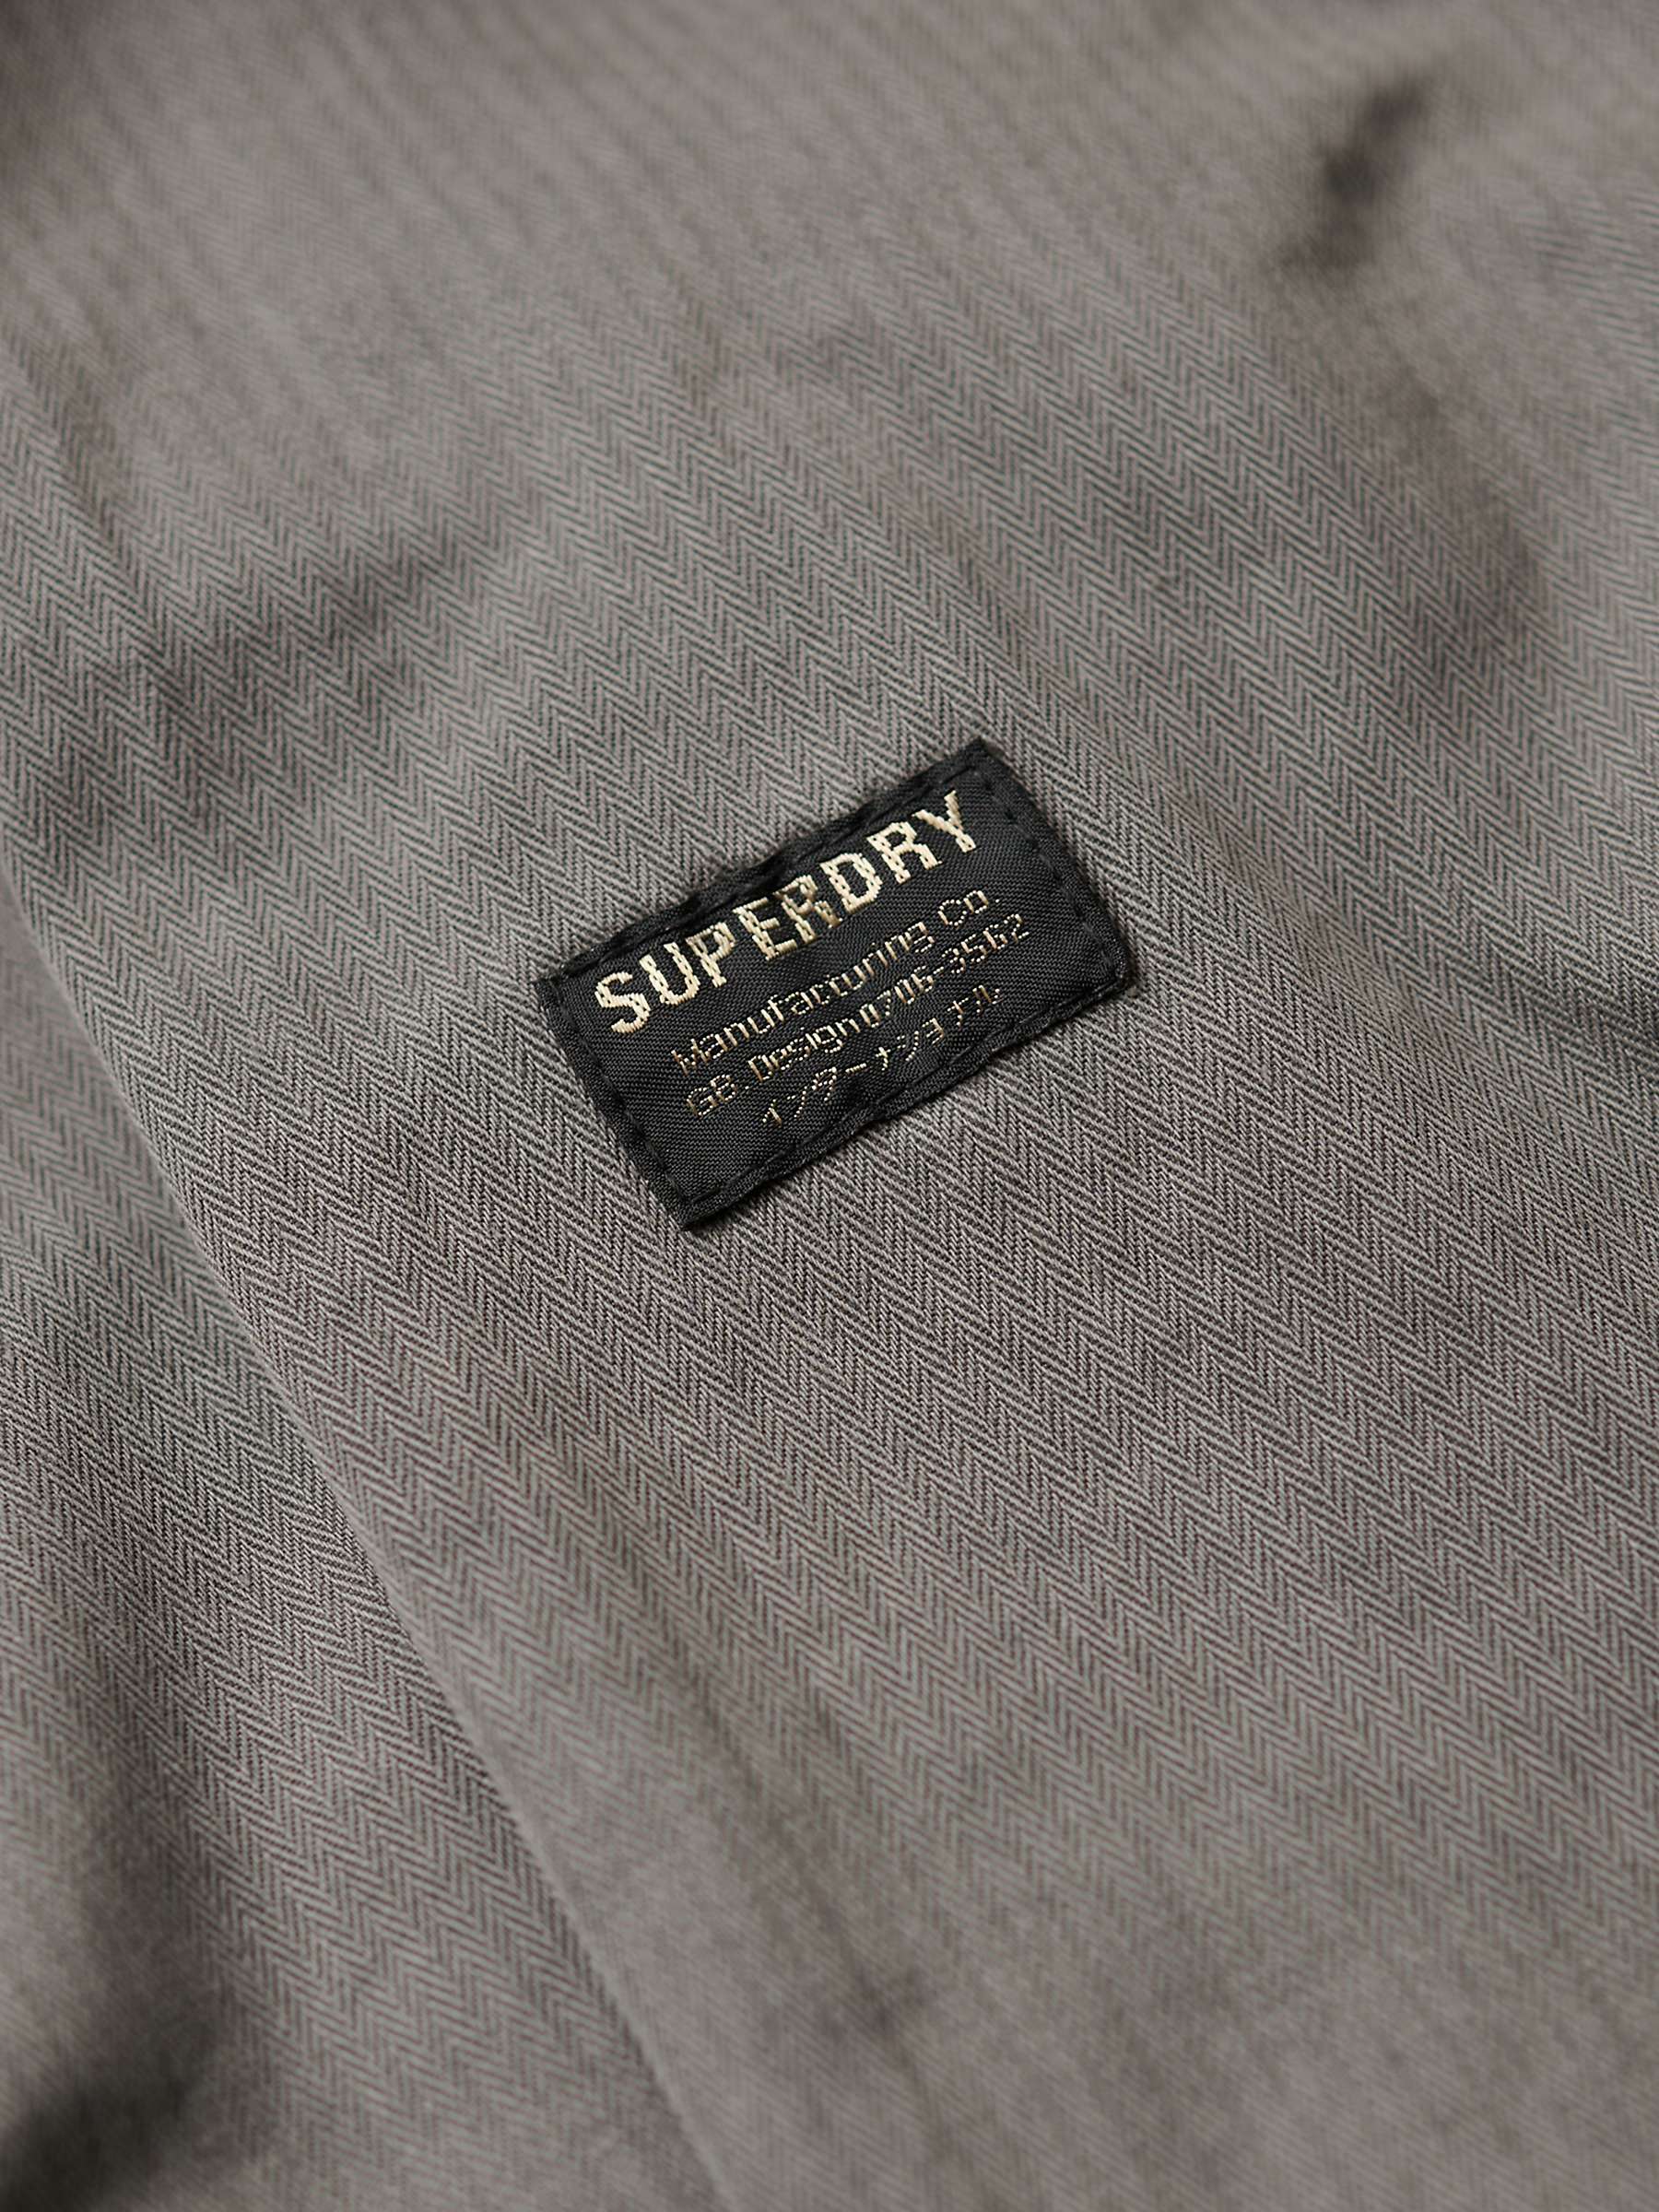 Buy Superdry Embroidered Lightweight Jacket Online at johnlewis.com